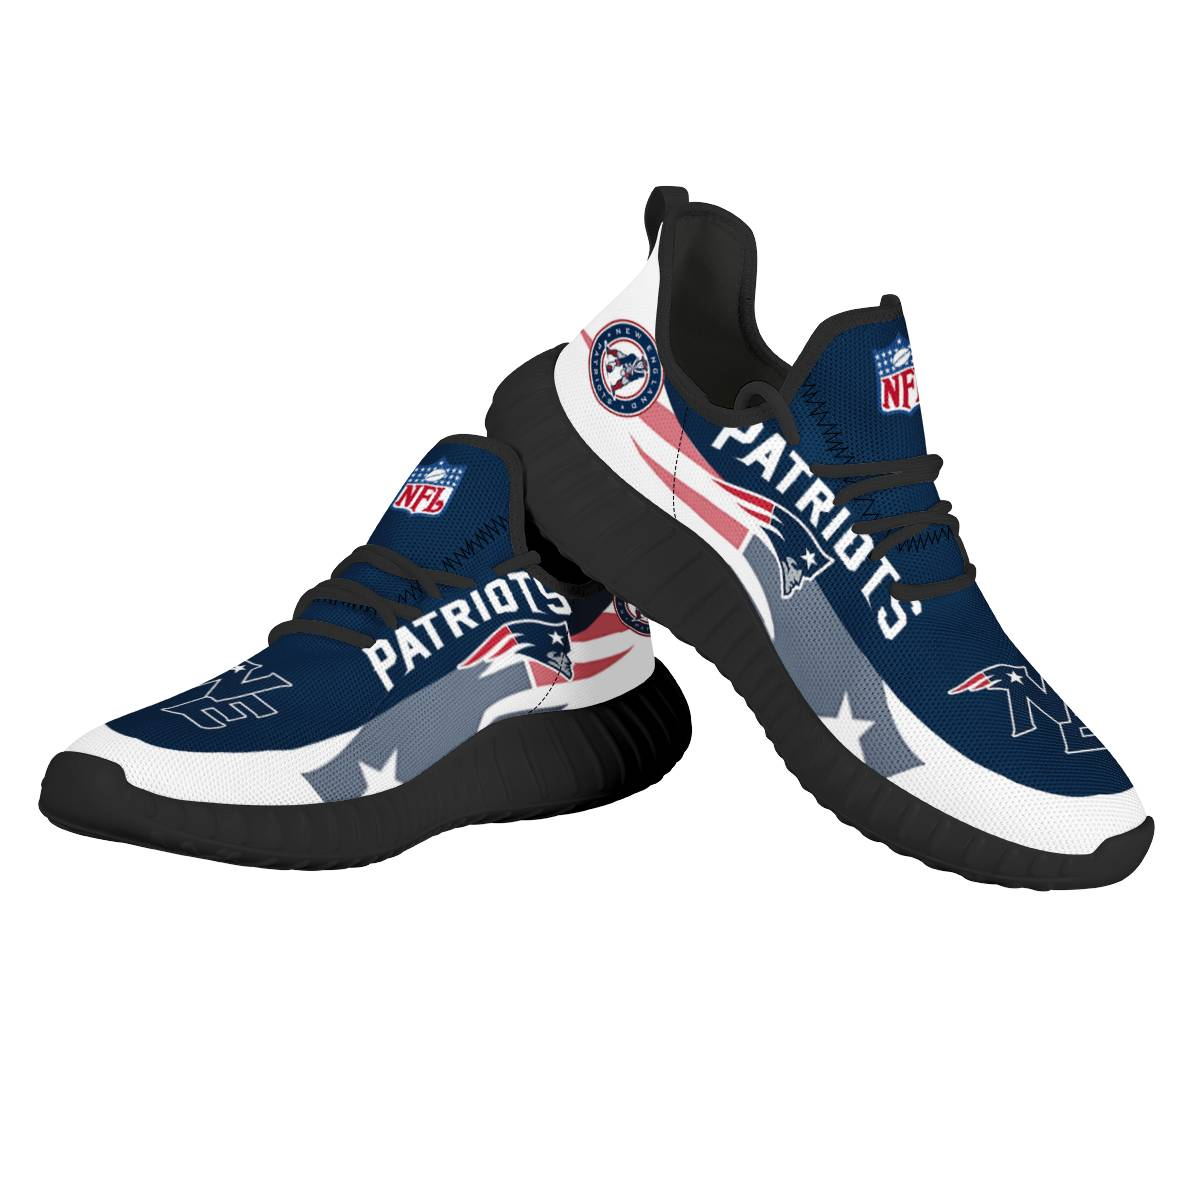 Men's NFL New England Patriots Mesh Knit Sneakers/Shoes 009